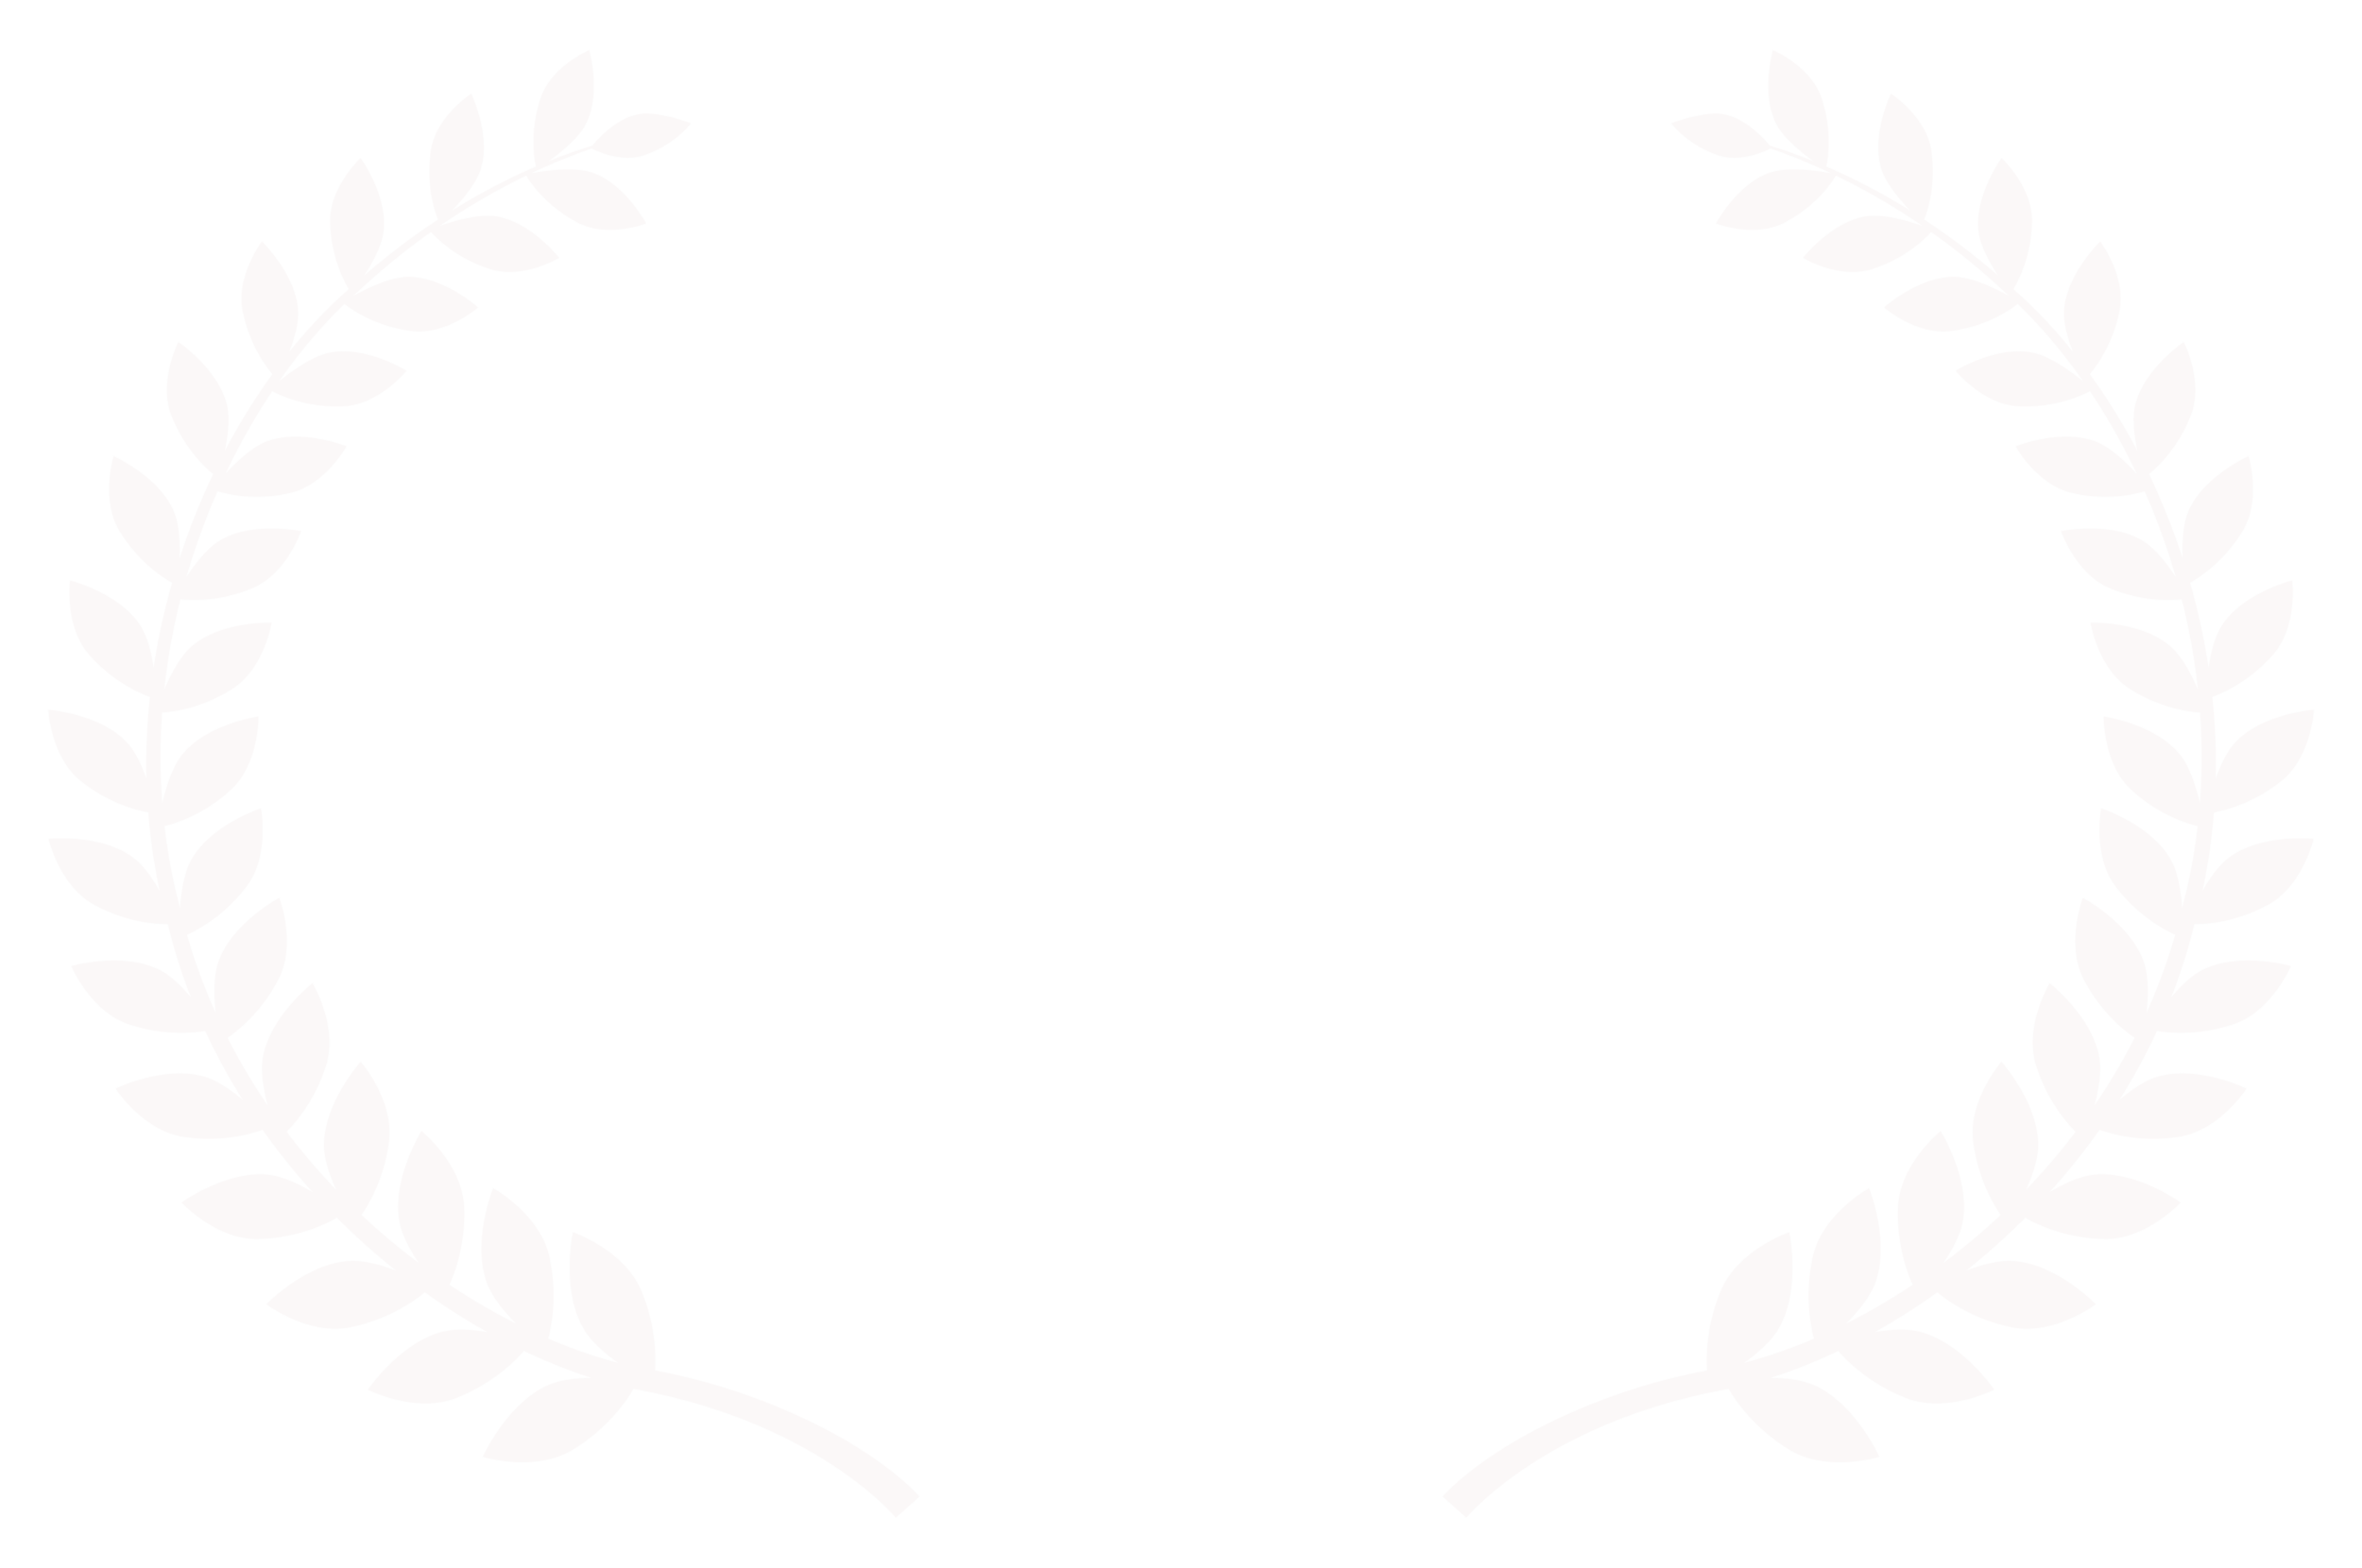 Filmmatic Filmmaker Awards 2016 | Competition Finalist